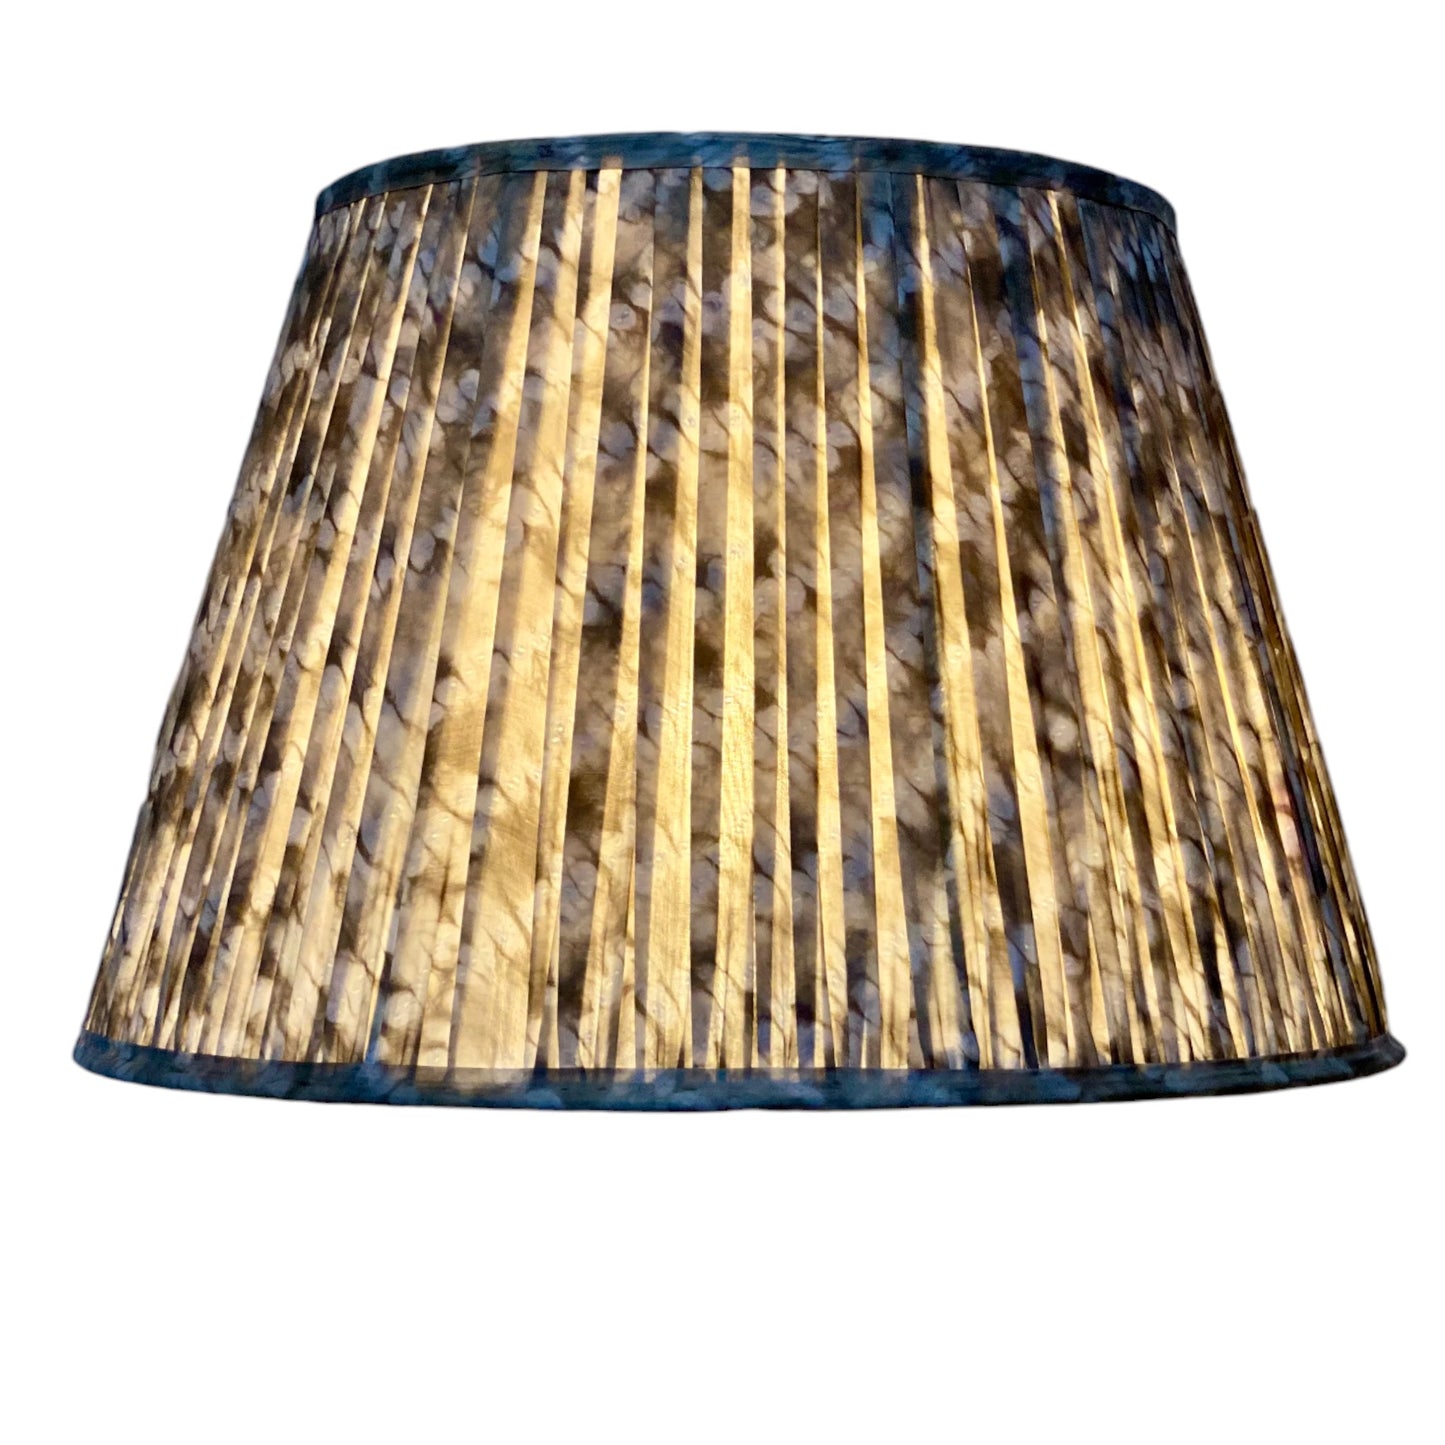 Shibori cochin lampshade lit